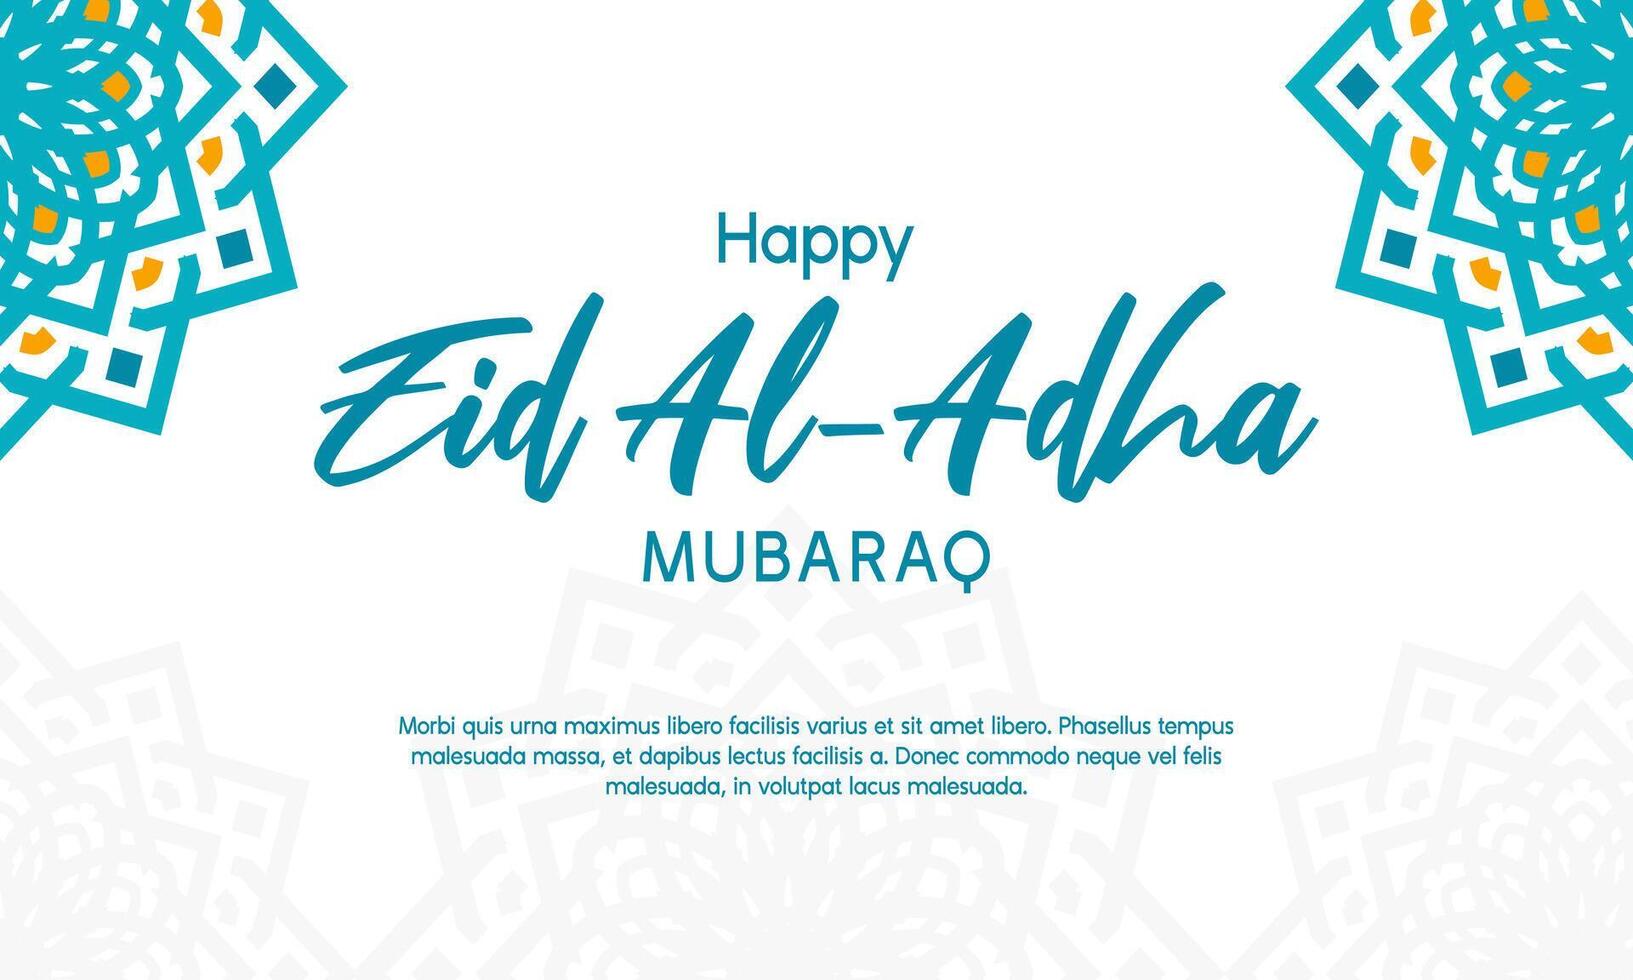 happy eid adha mubarak banner design with arabesque pattern vector